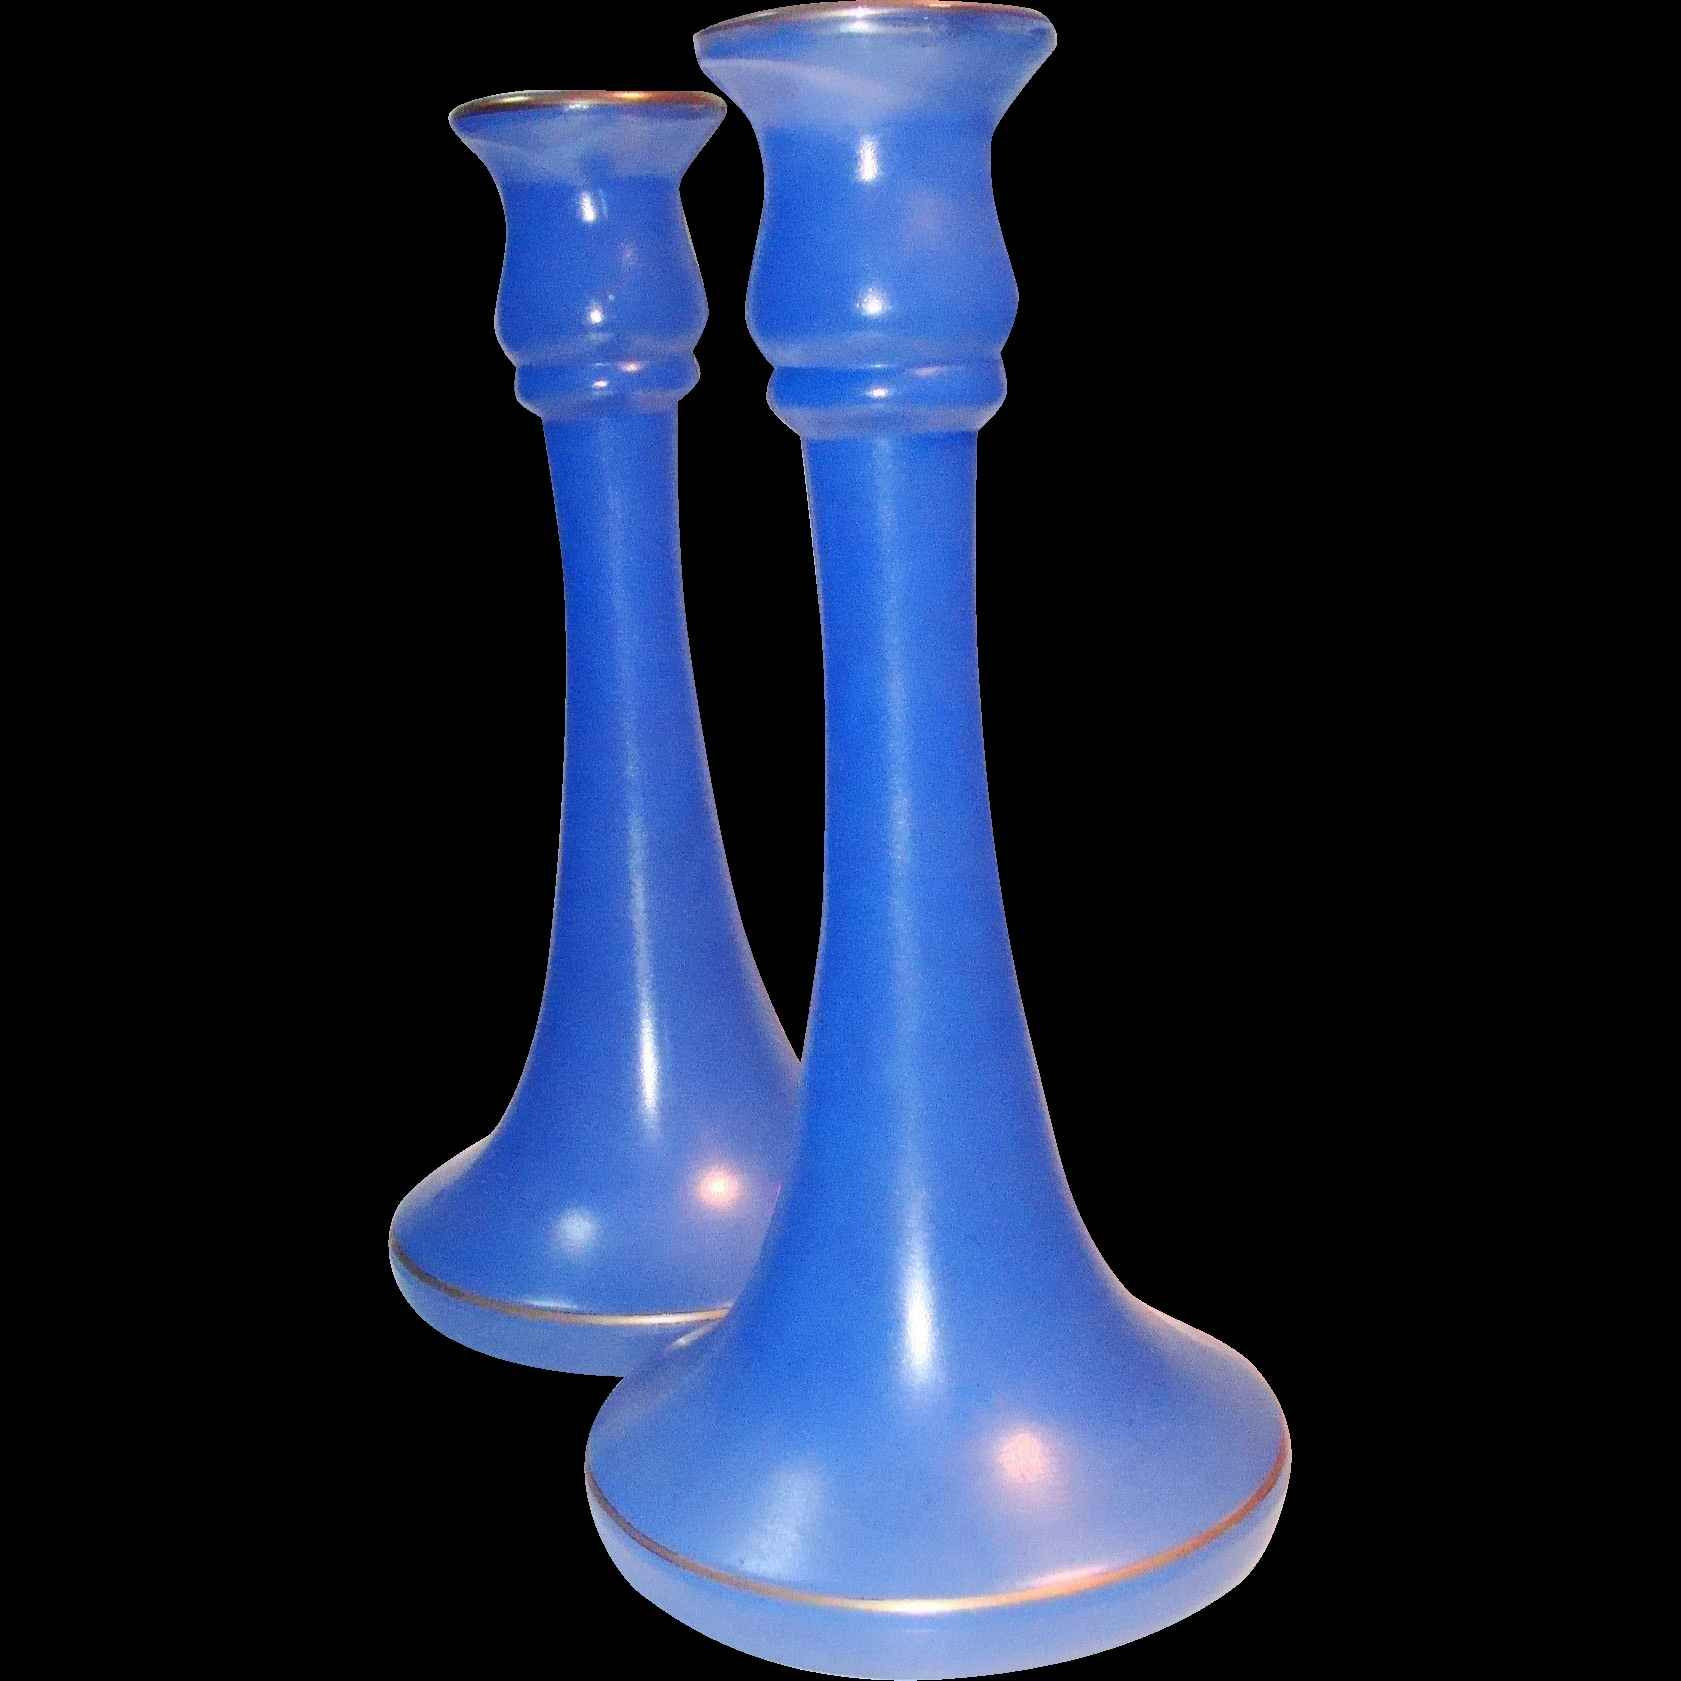 glass bud vase name card holders of 37 fenton blue glass vase the weekly world intended for 37 fenton blue glass vase